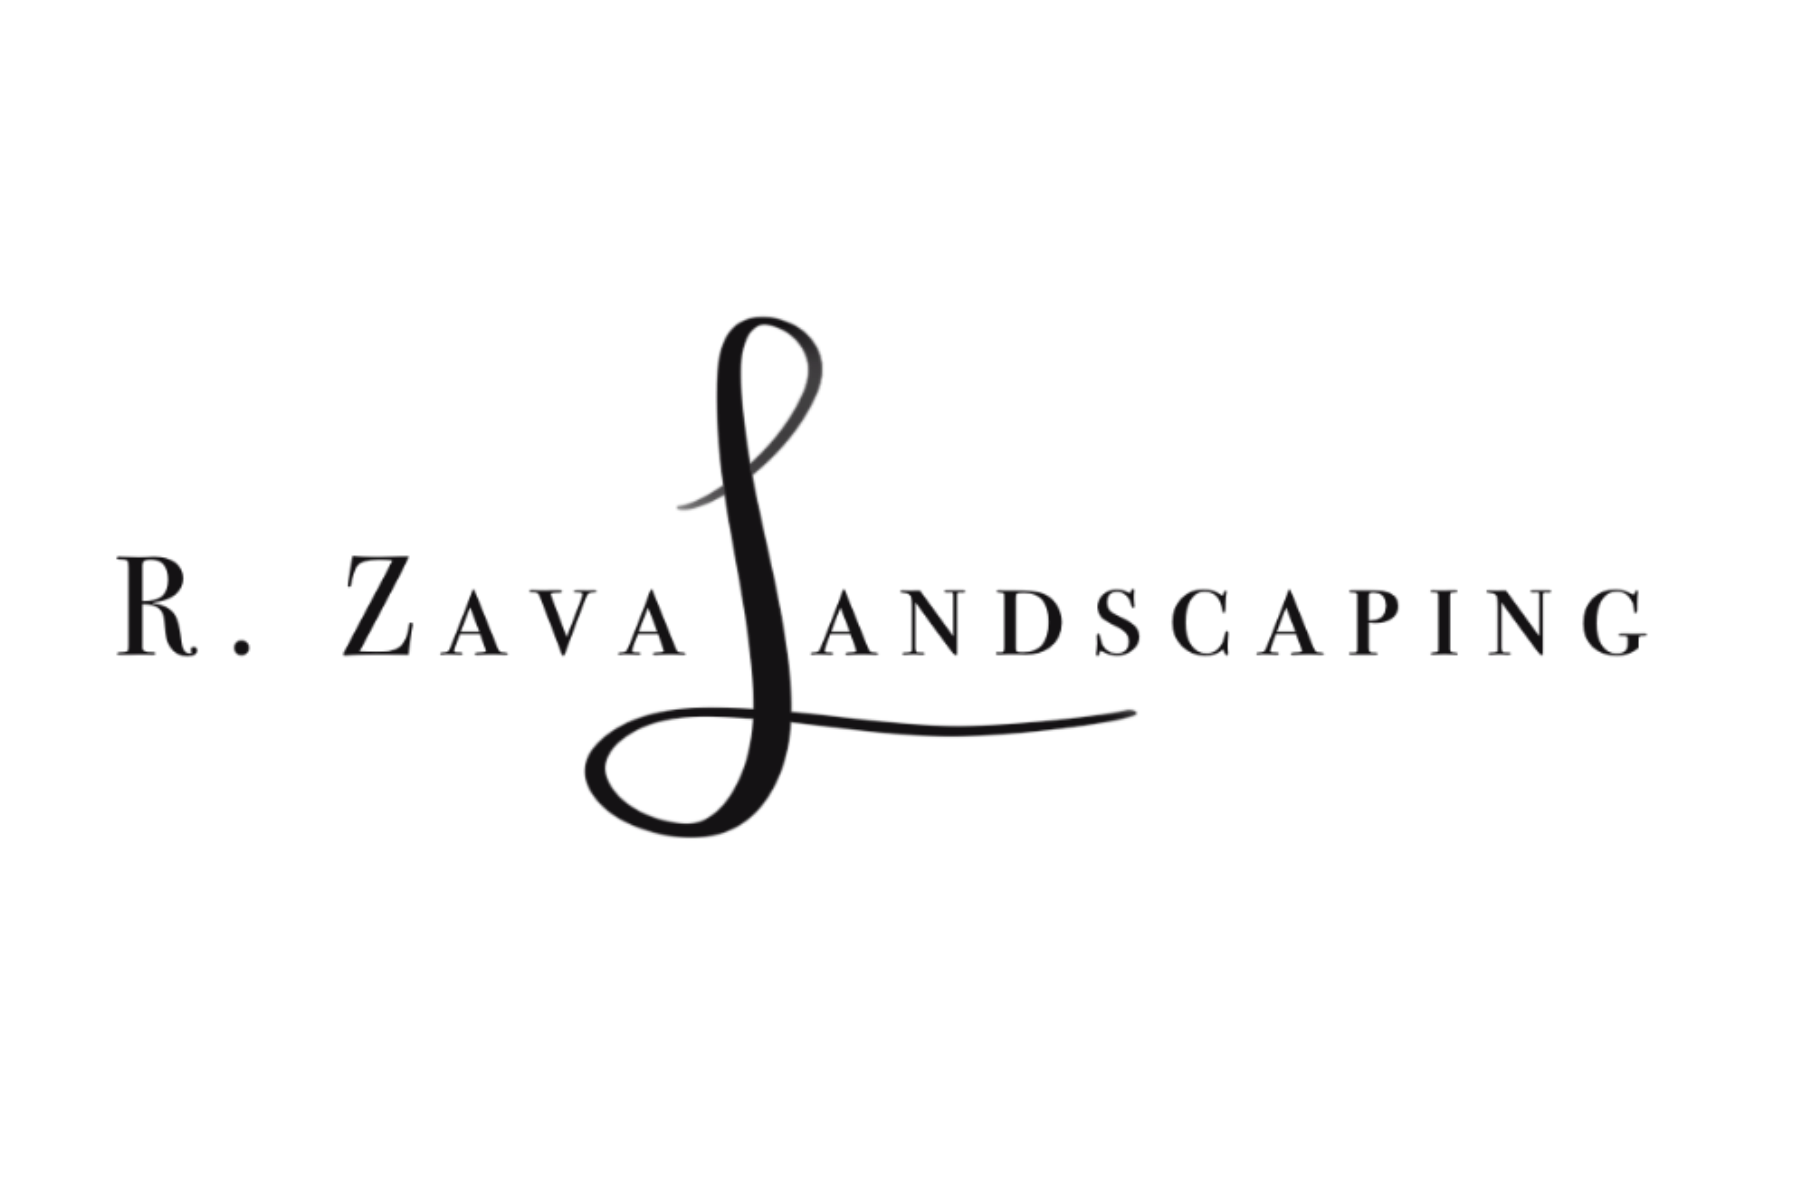 R.Zavalandscaping